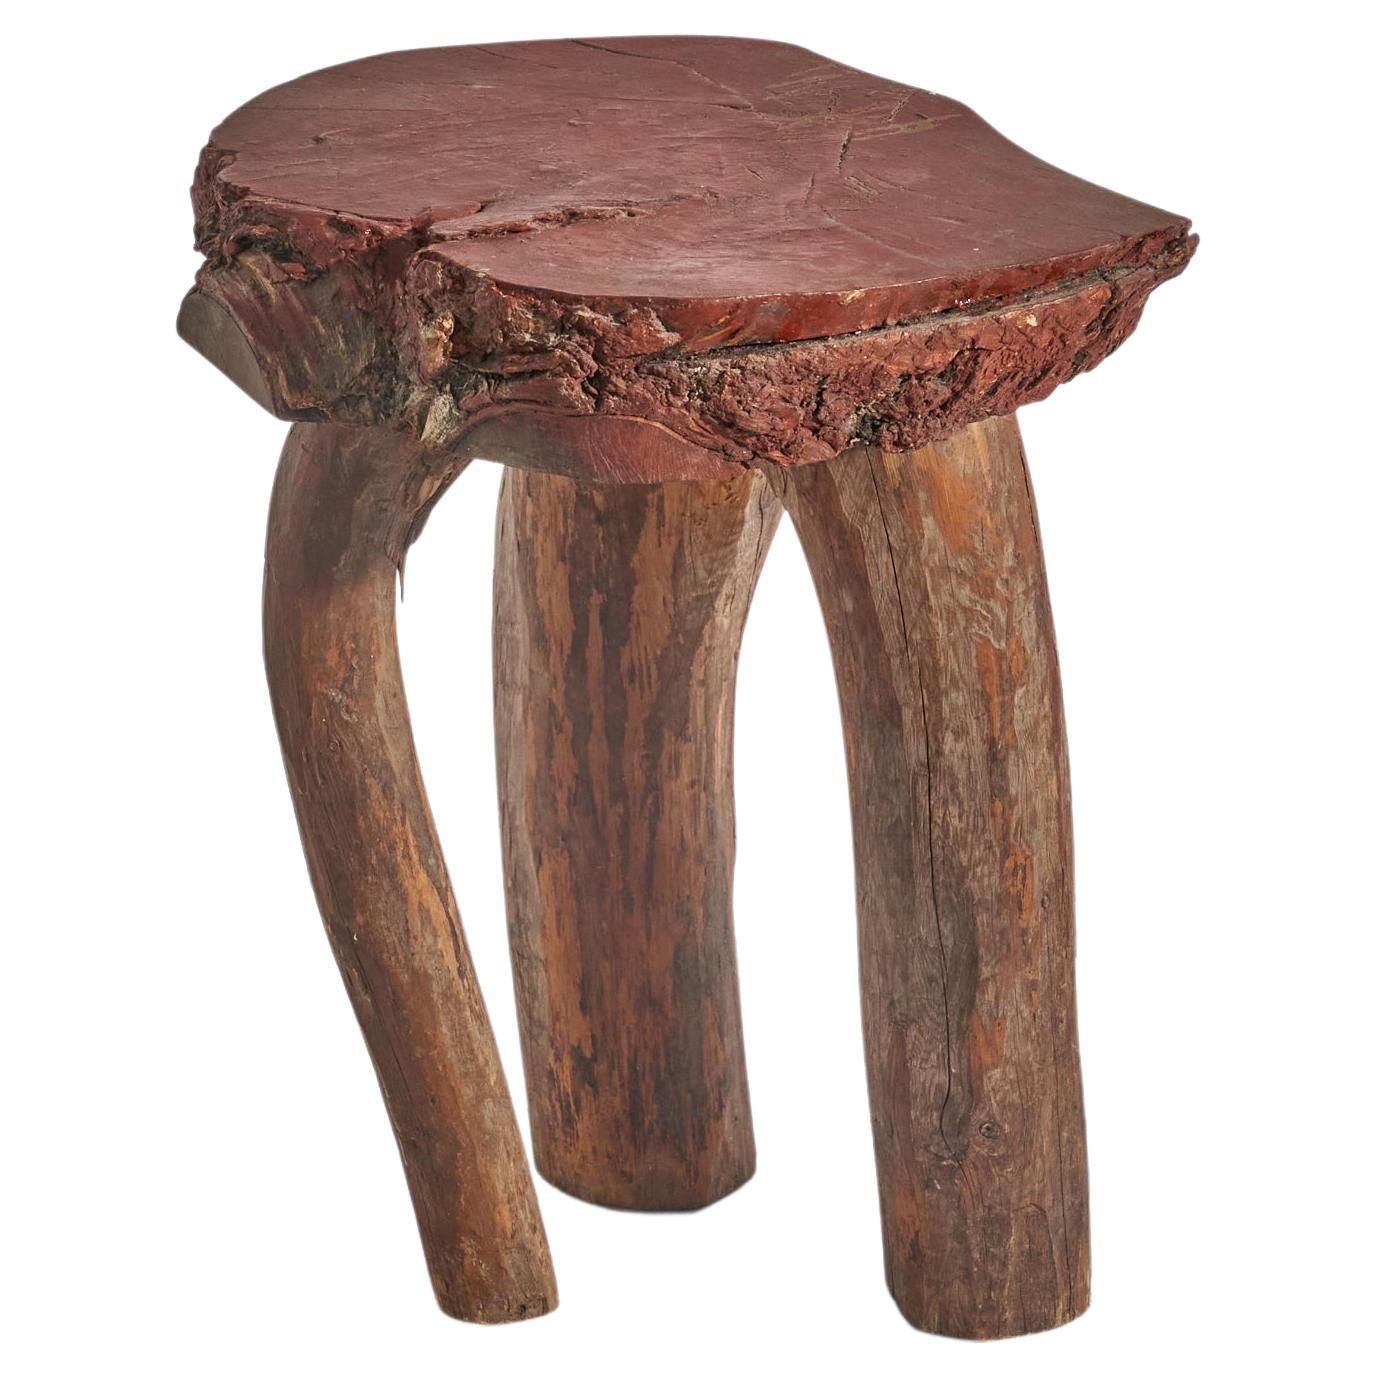 Swedish Designer, Side Table / Stool, Wood, "Faluröd" Paint, 19th Century For Sale